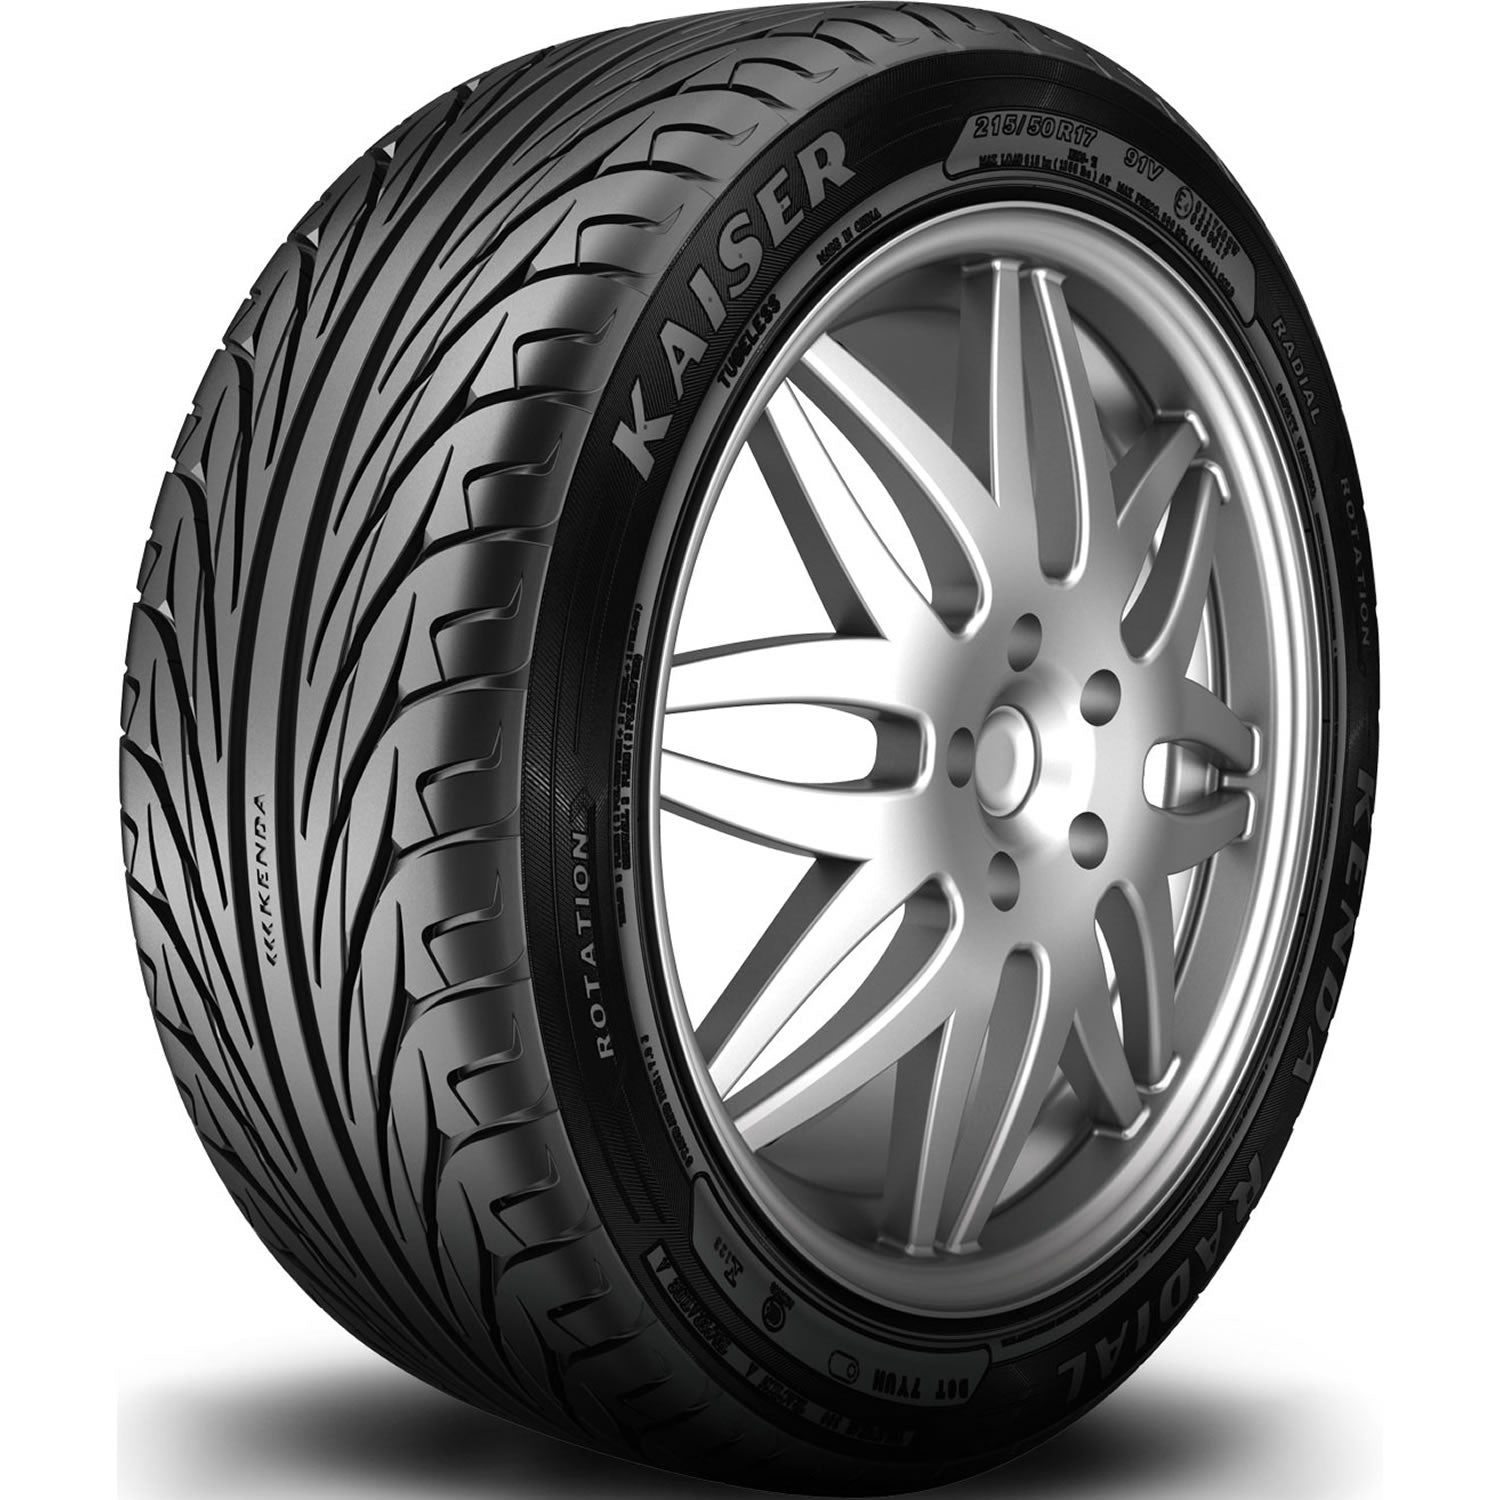 KENDA KAISER 235/40ZR18 (25.4X9.5R 18) Tires